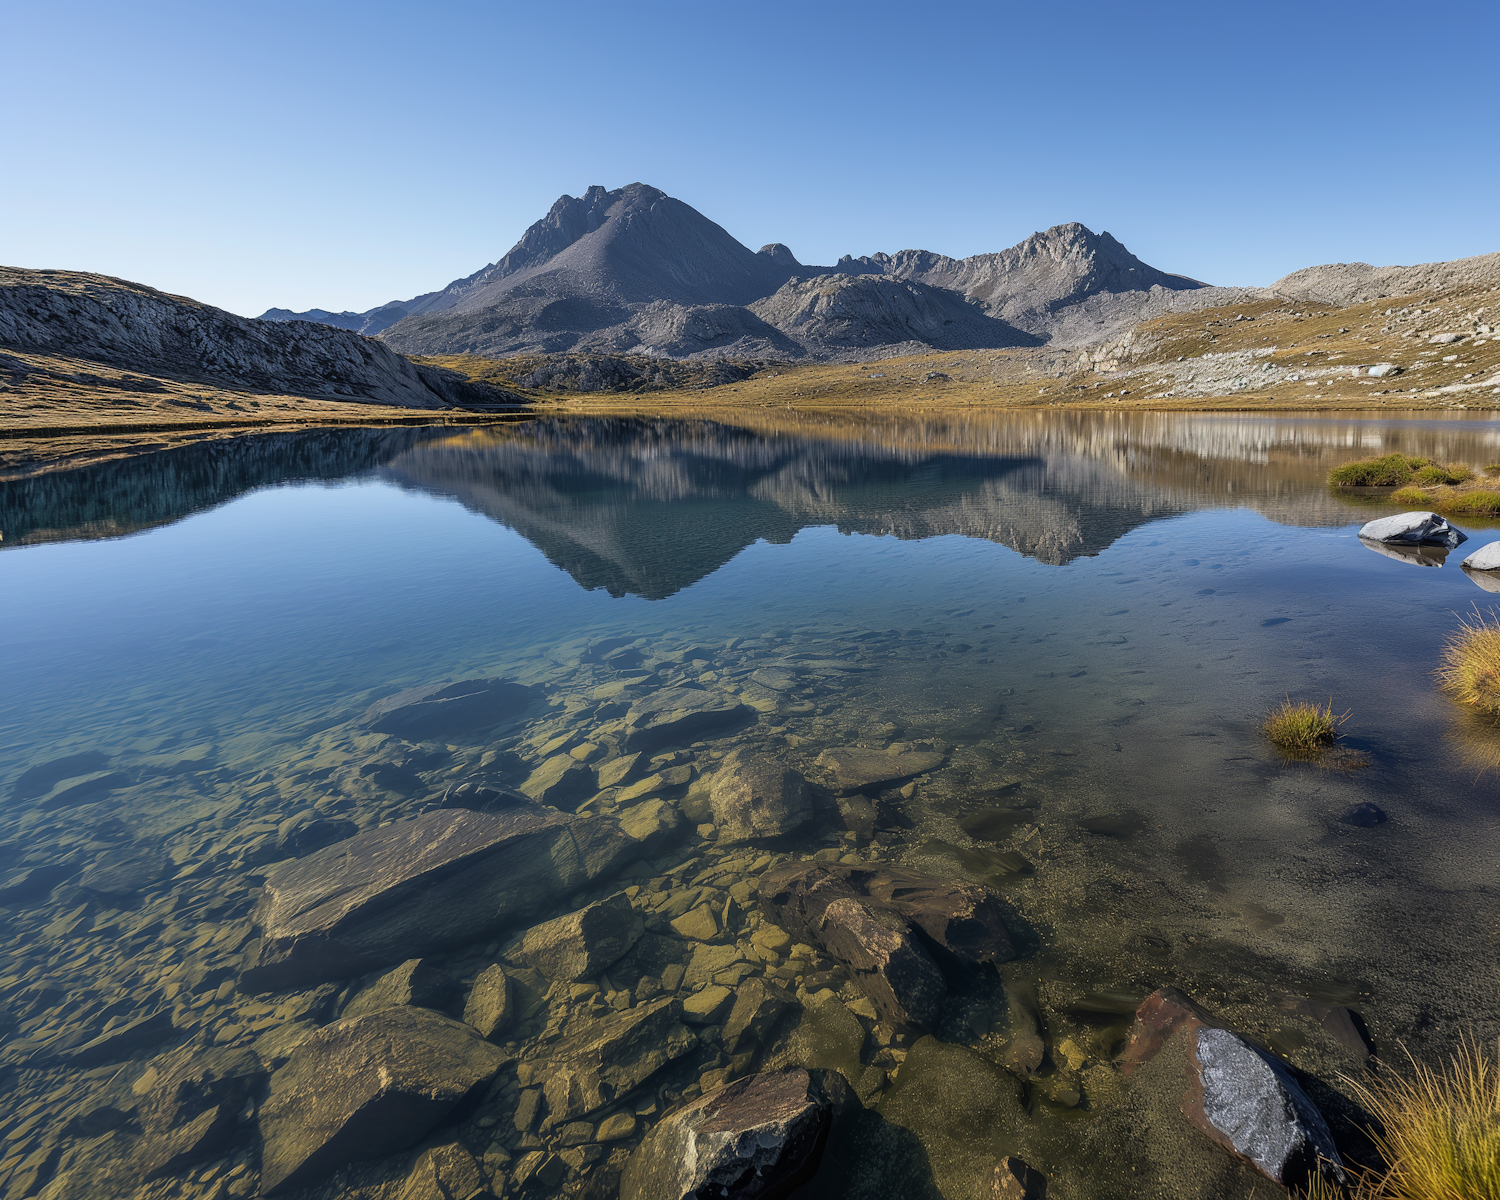 Serene Mountain Landscape with Reflective Lake